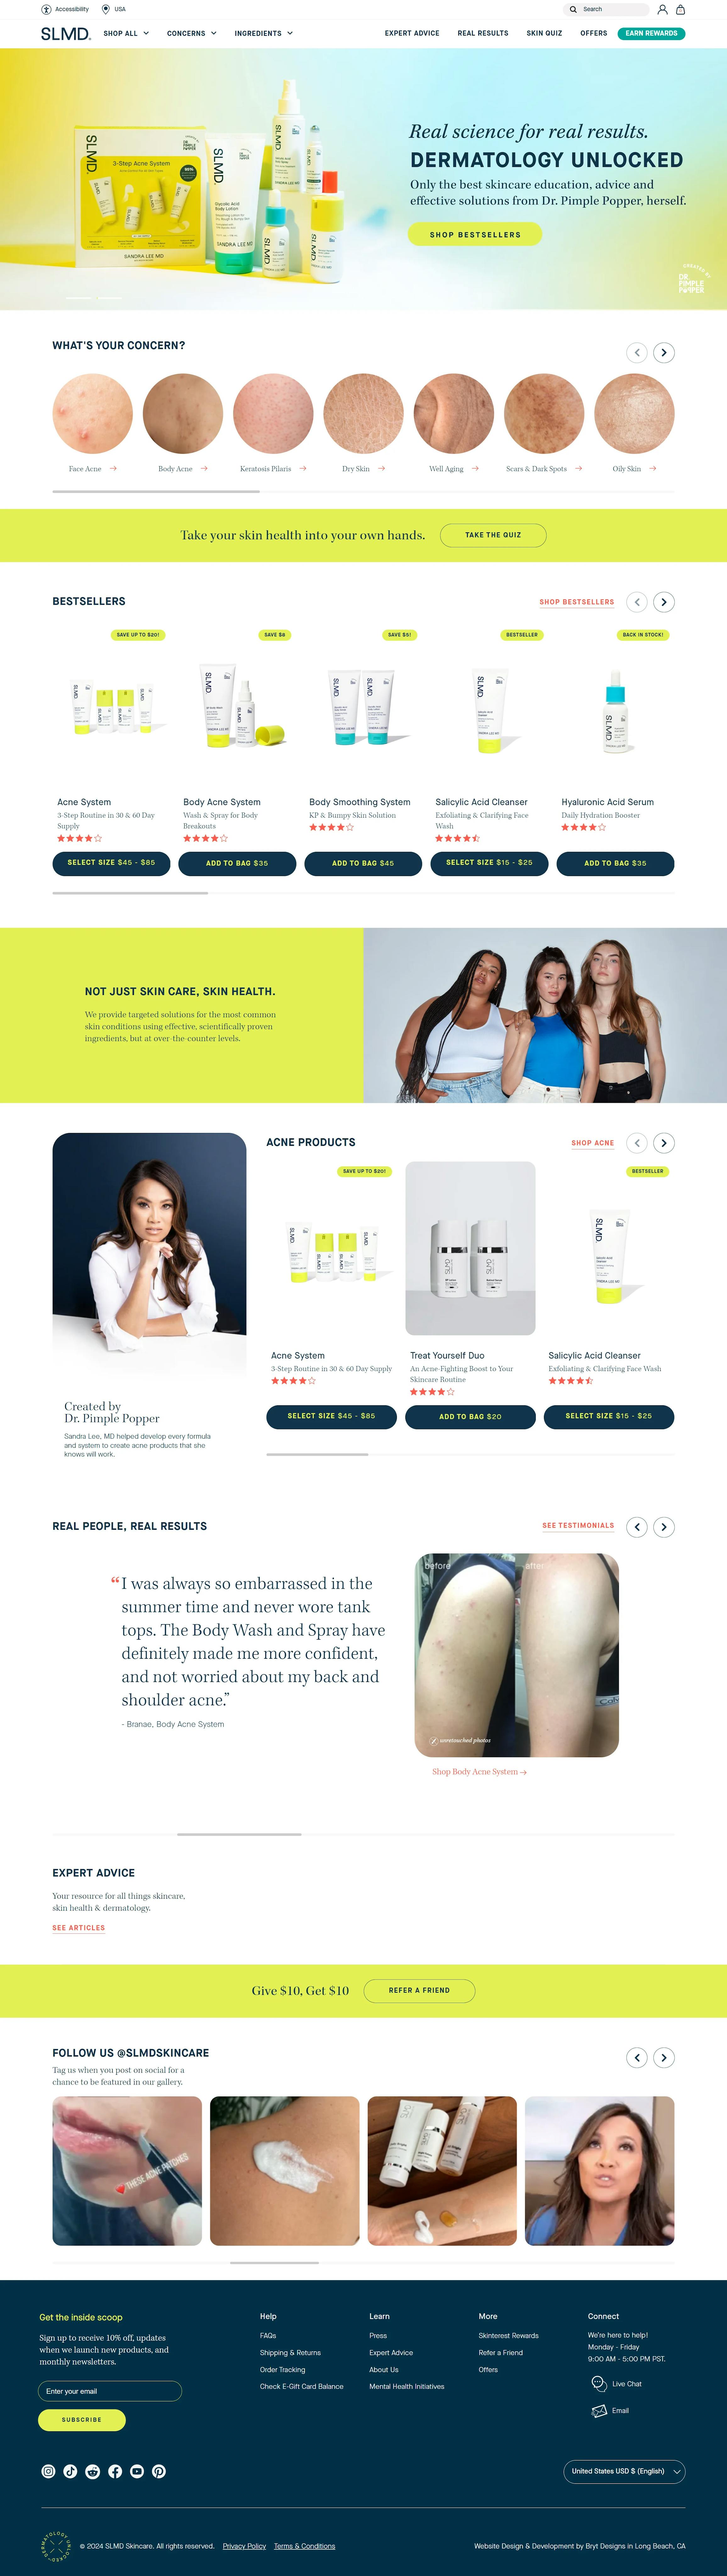 SLMD Skincare home page